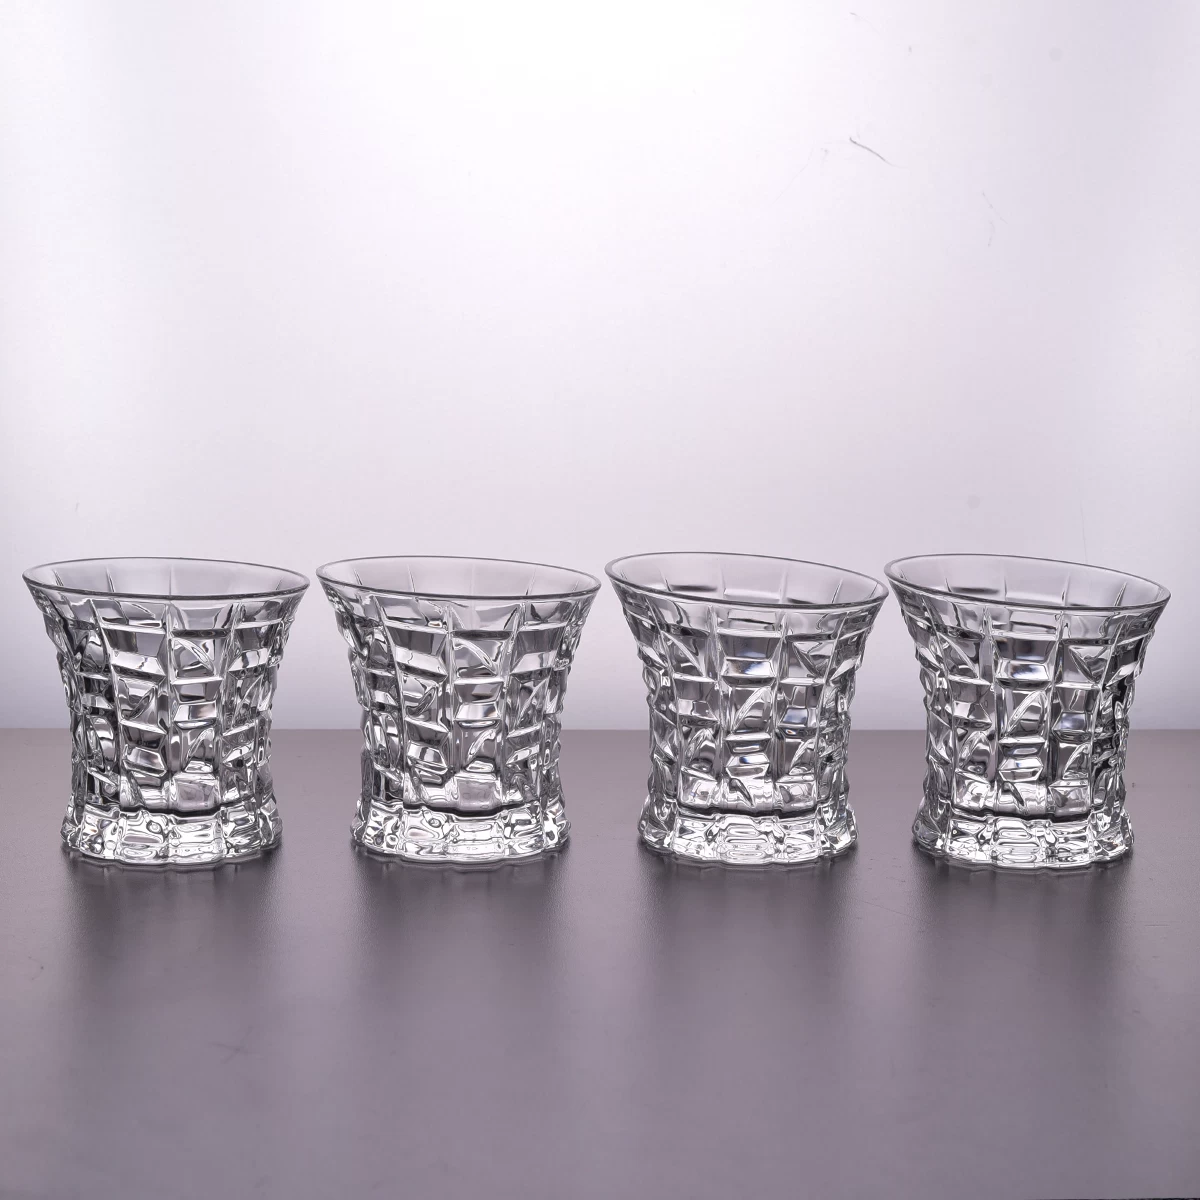 Luxury High Quality Whiskey Glass Bottles Set